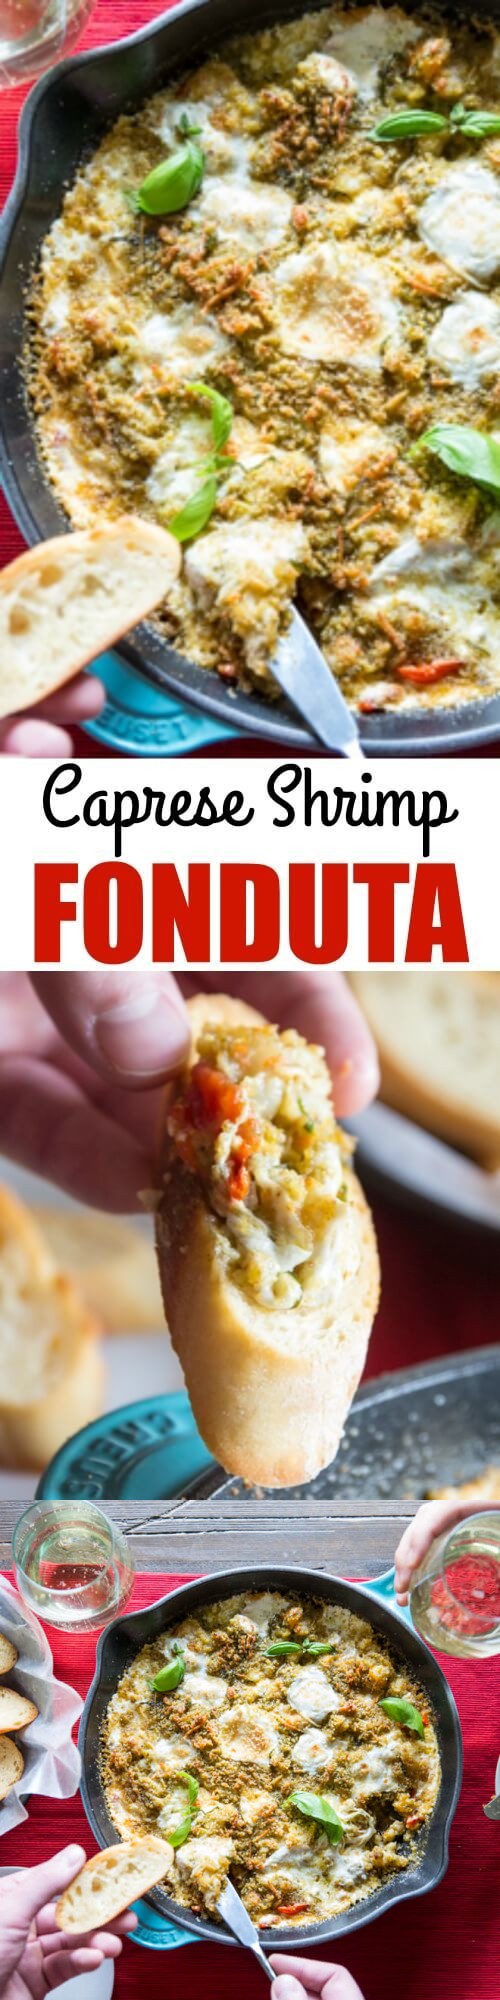 Caprese Shrimp Fonduta